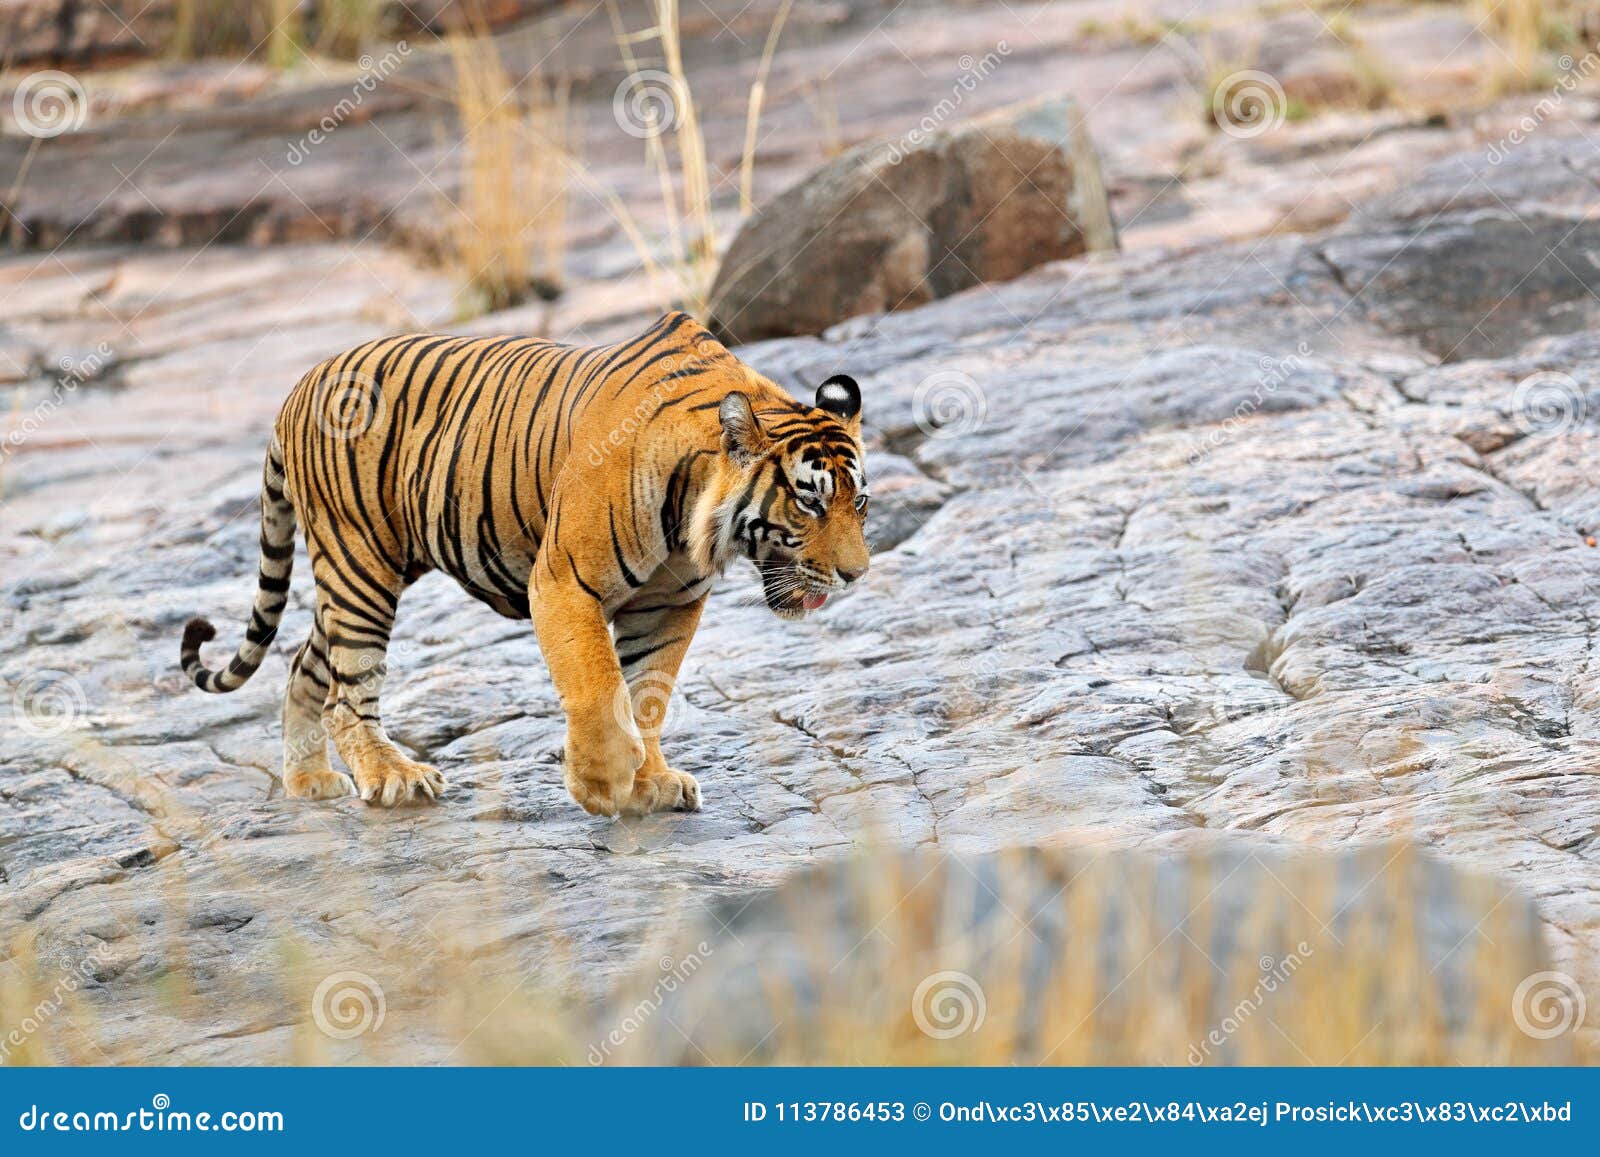 Wildlife in danger. Тигр шагает. Бенгальский тигр Индия. Шагающий тигр образ. Male Tiger walk.